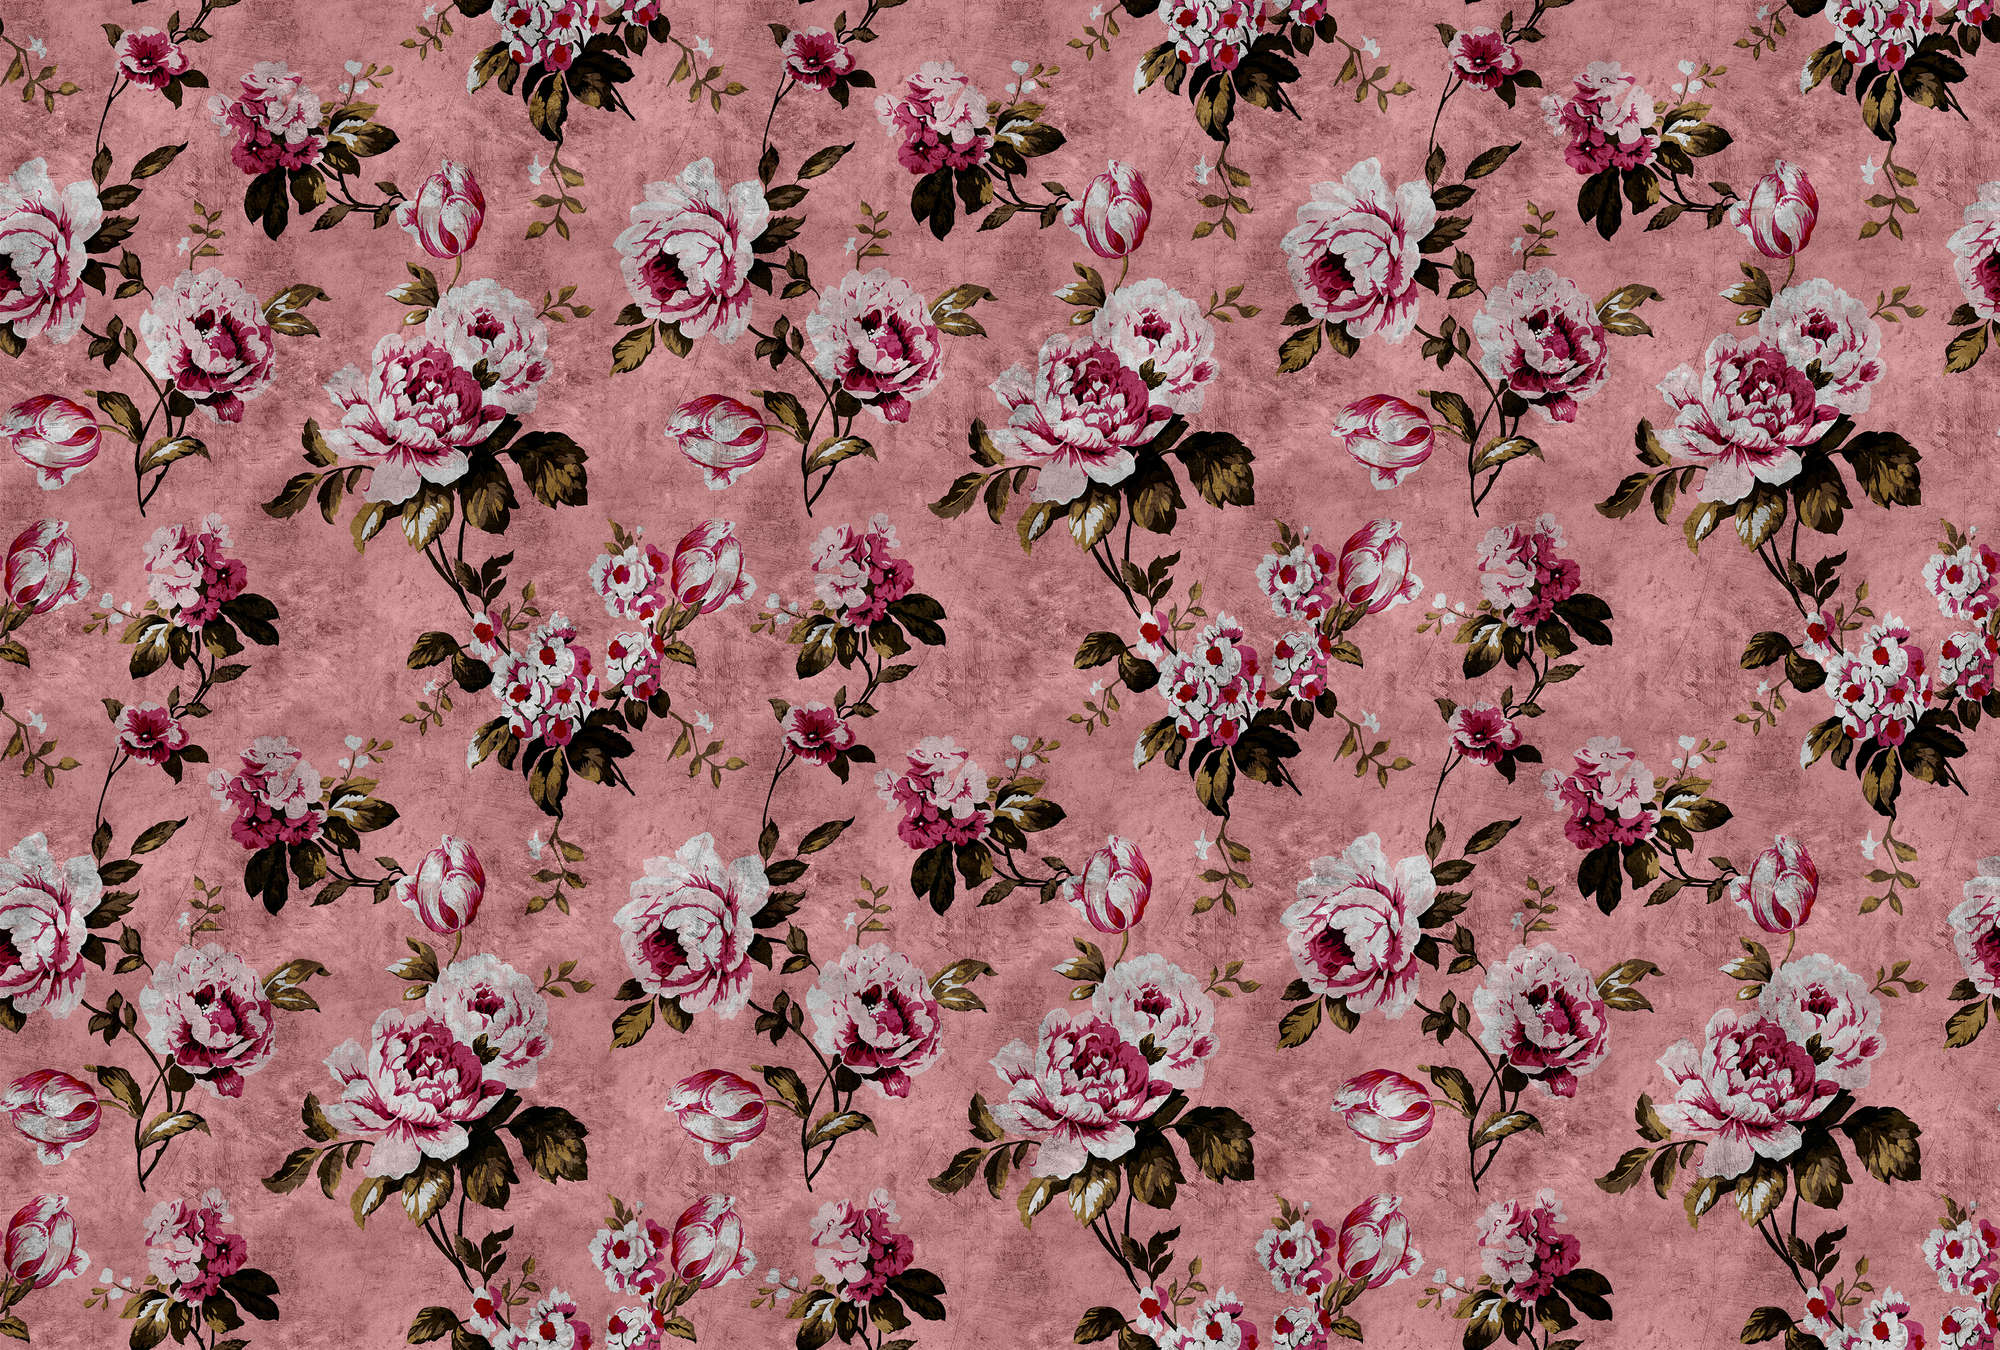             Wilde rozen 4 - Rozen fotobehang in retro look, roze in krasstructuur - Roze, Rood | Parel glad vlies
        